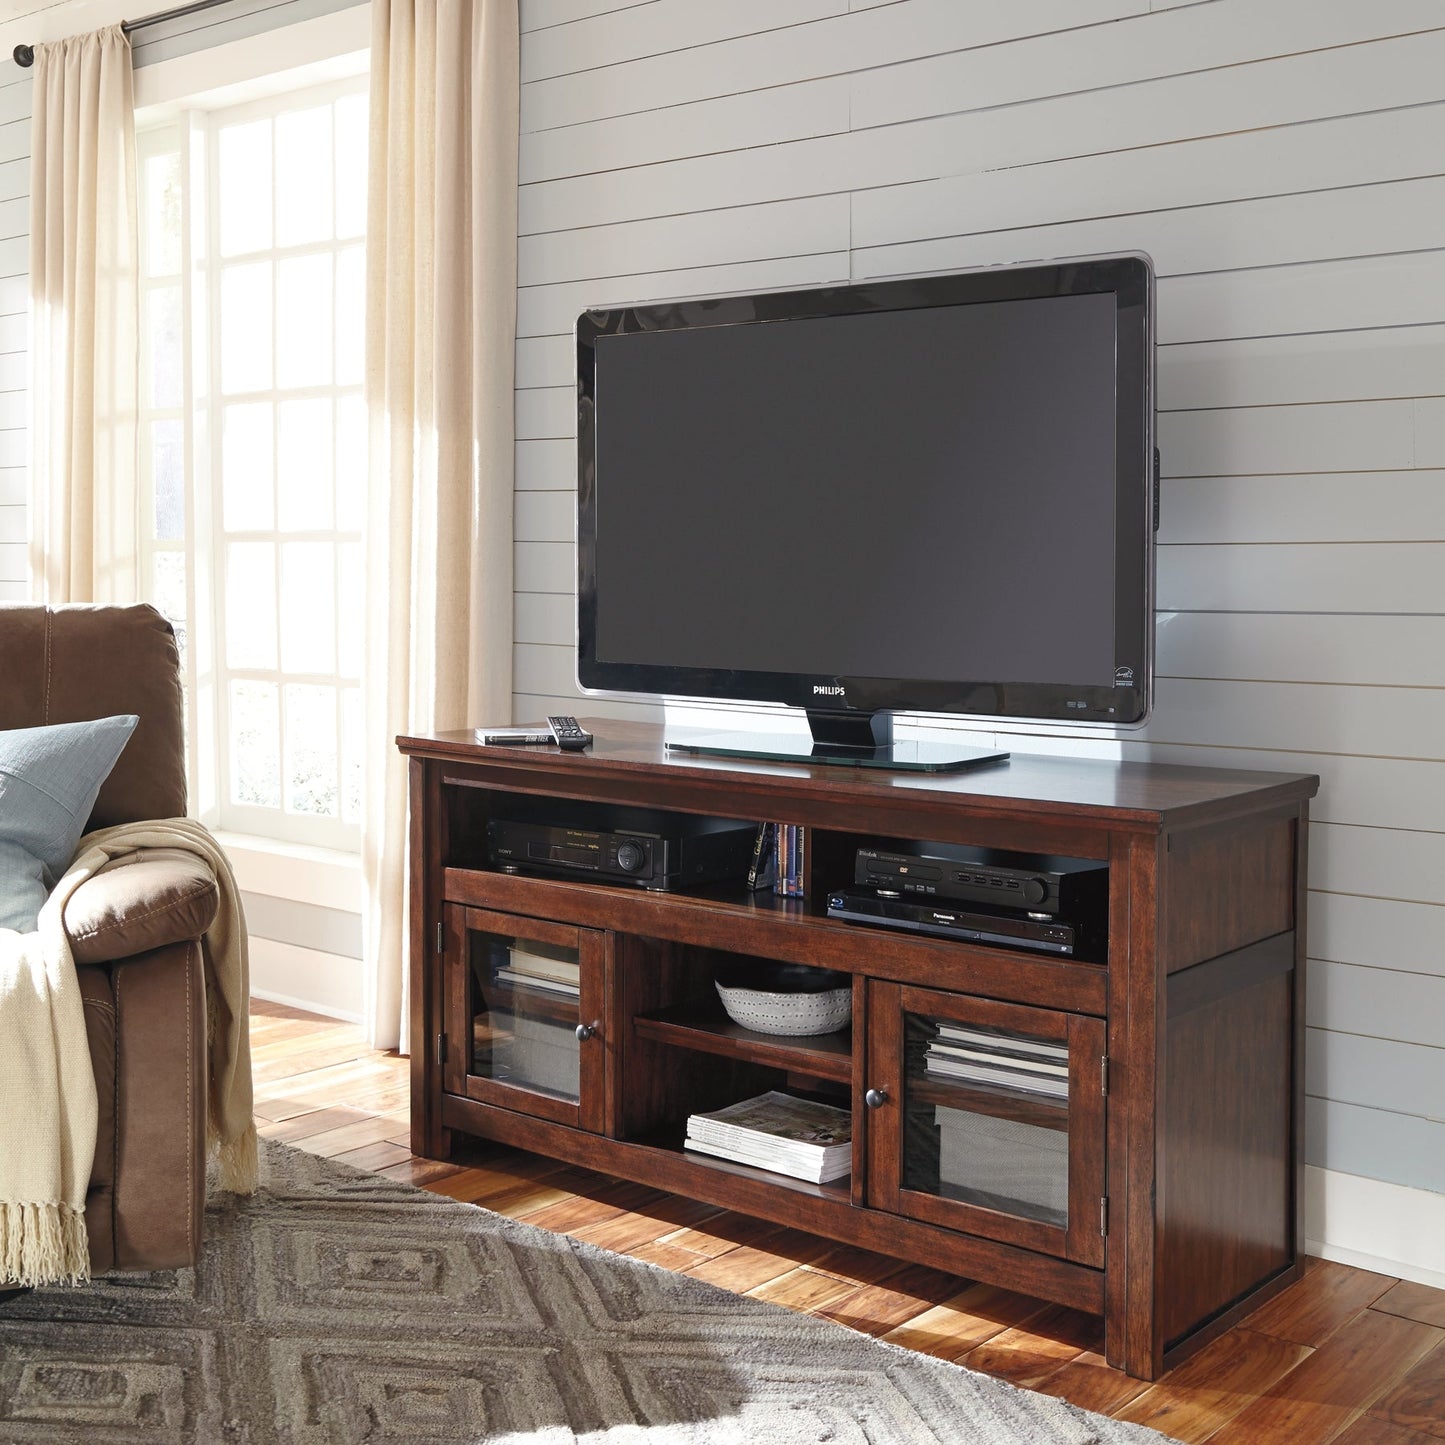 Harpan Large TV Stand at Cloud 9 Mattress & Furniture furniture, home furnishing, home decor